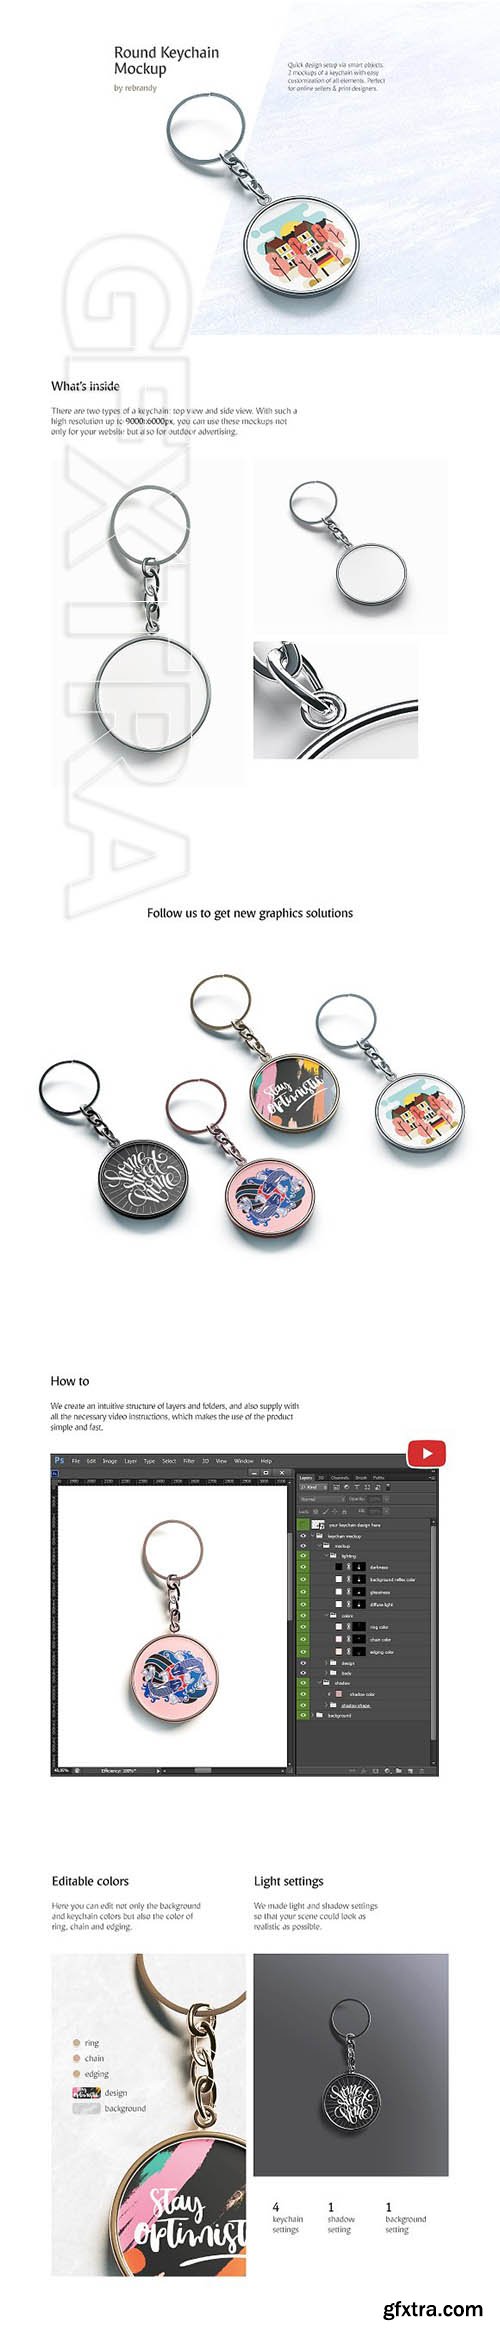 CreativeMarket - Round Keychain Mockup 2960400